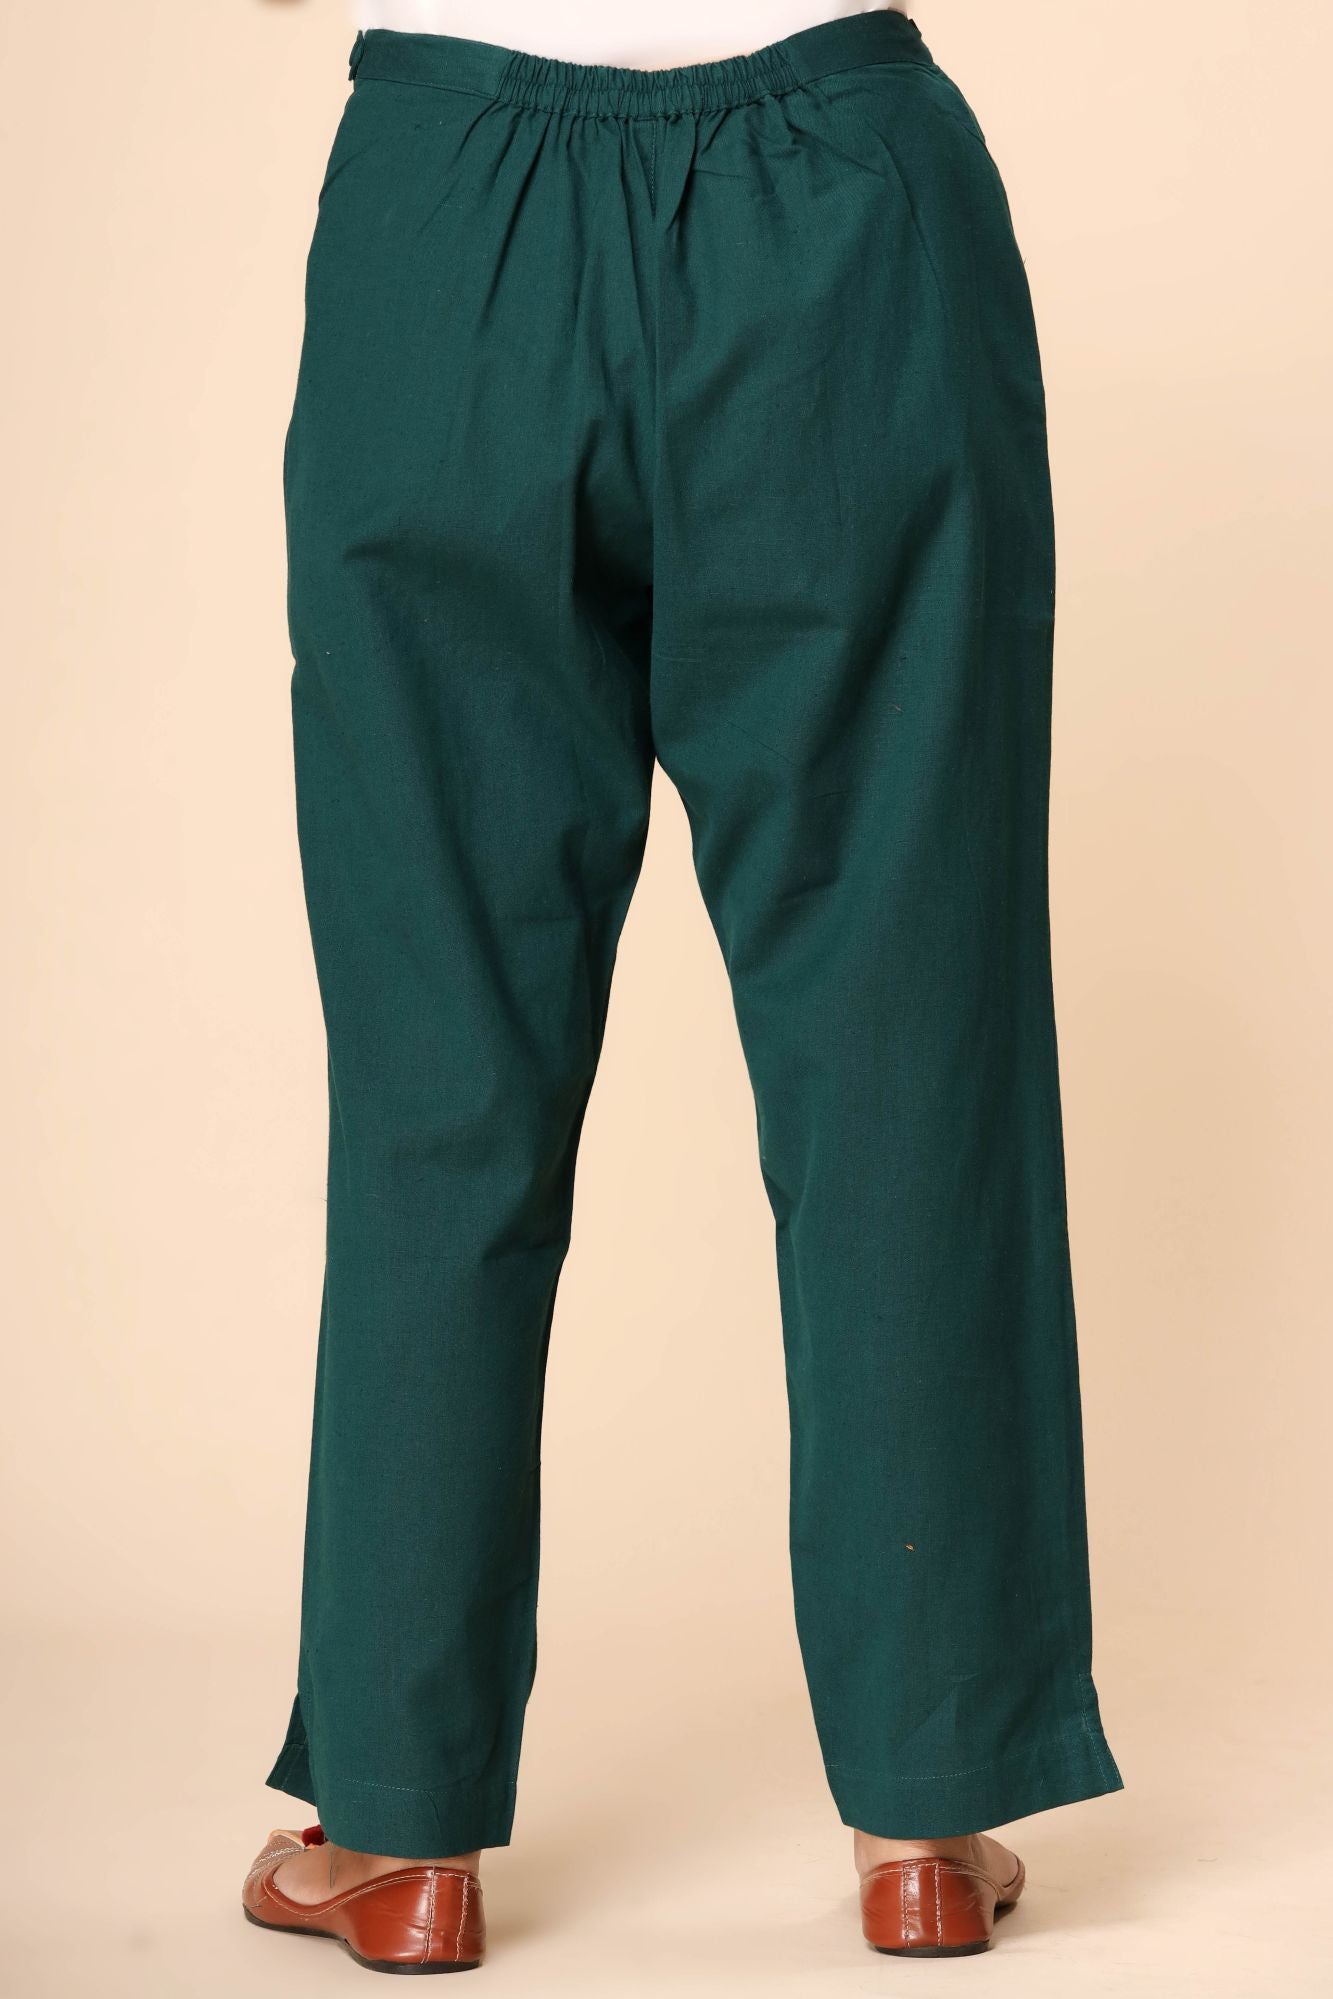 Dark Green Pants Co-ord Set: Shirt + Pants (2-piece) – KrynandMoey